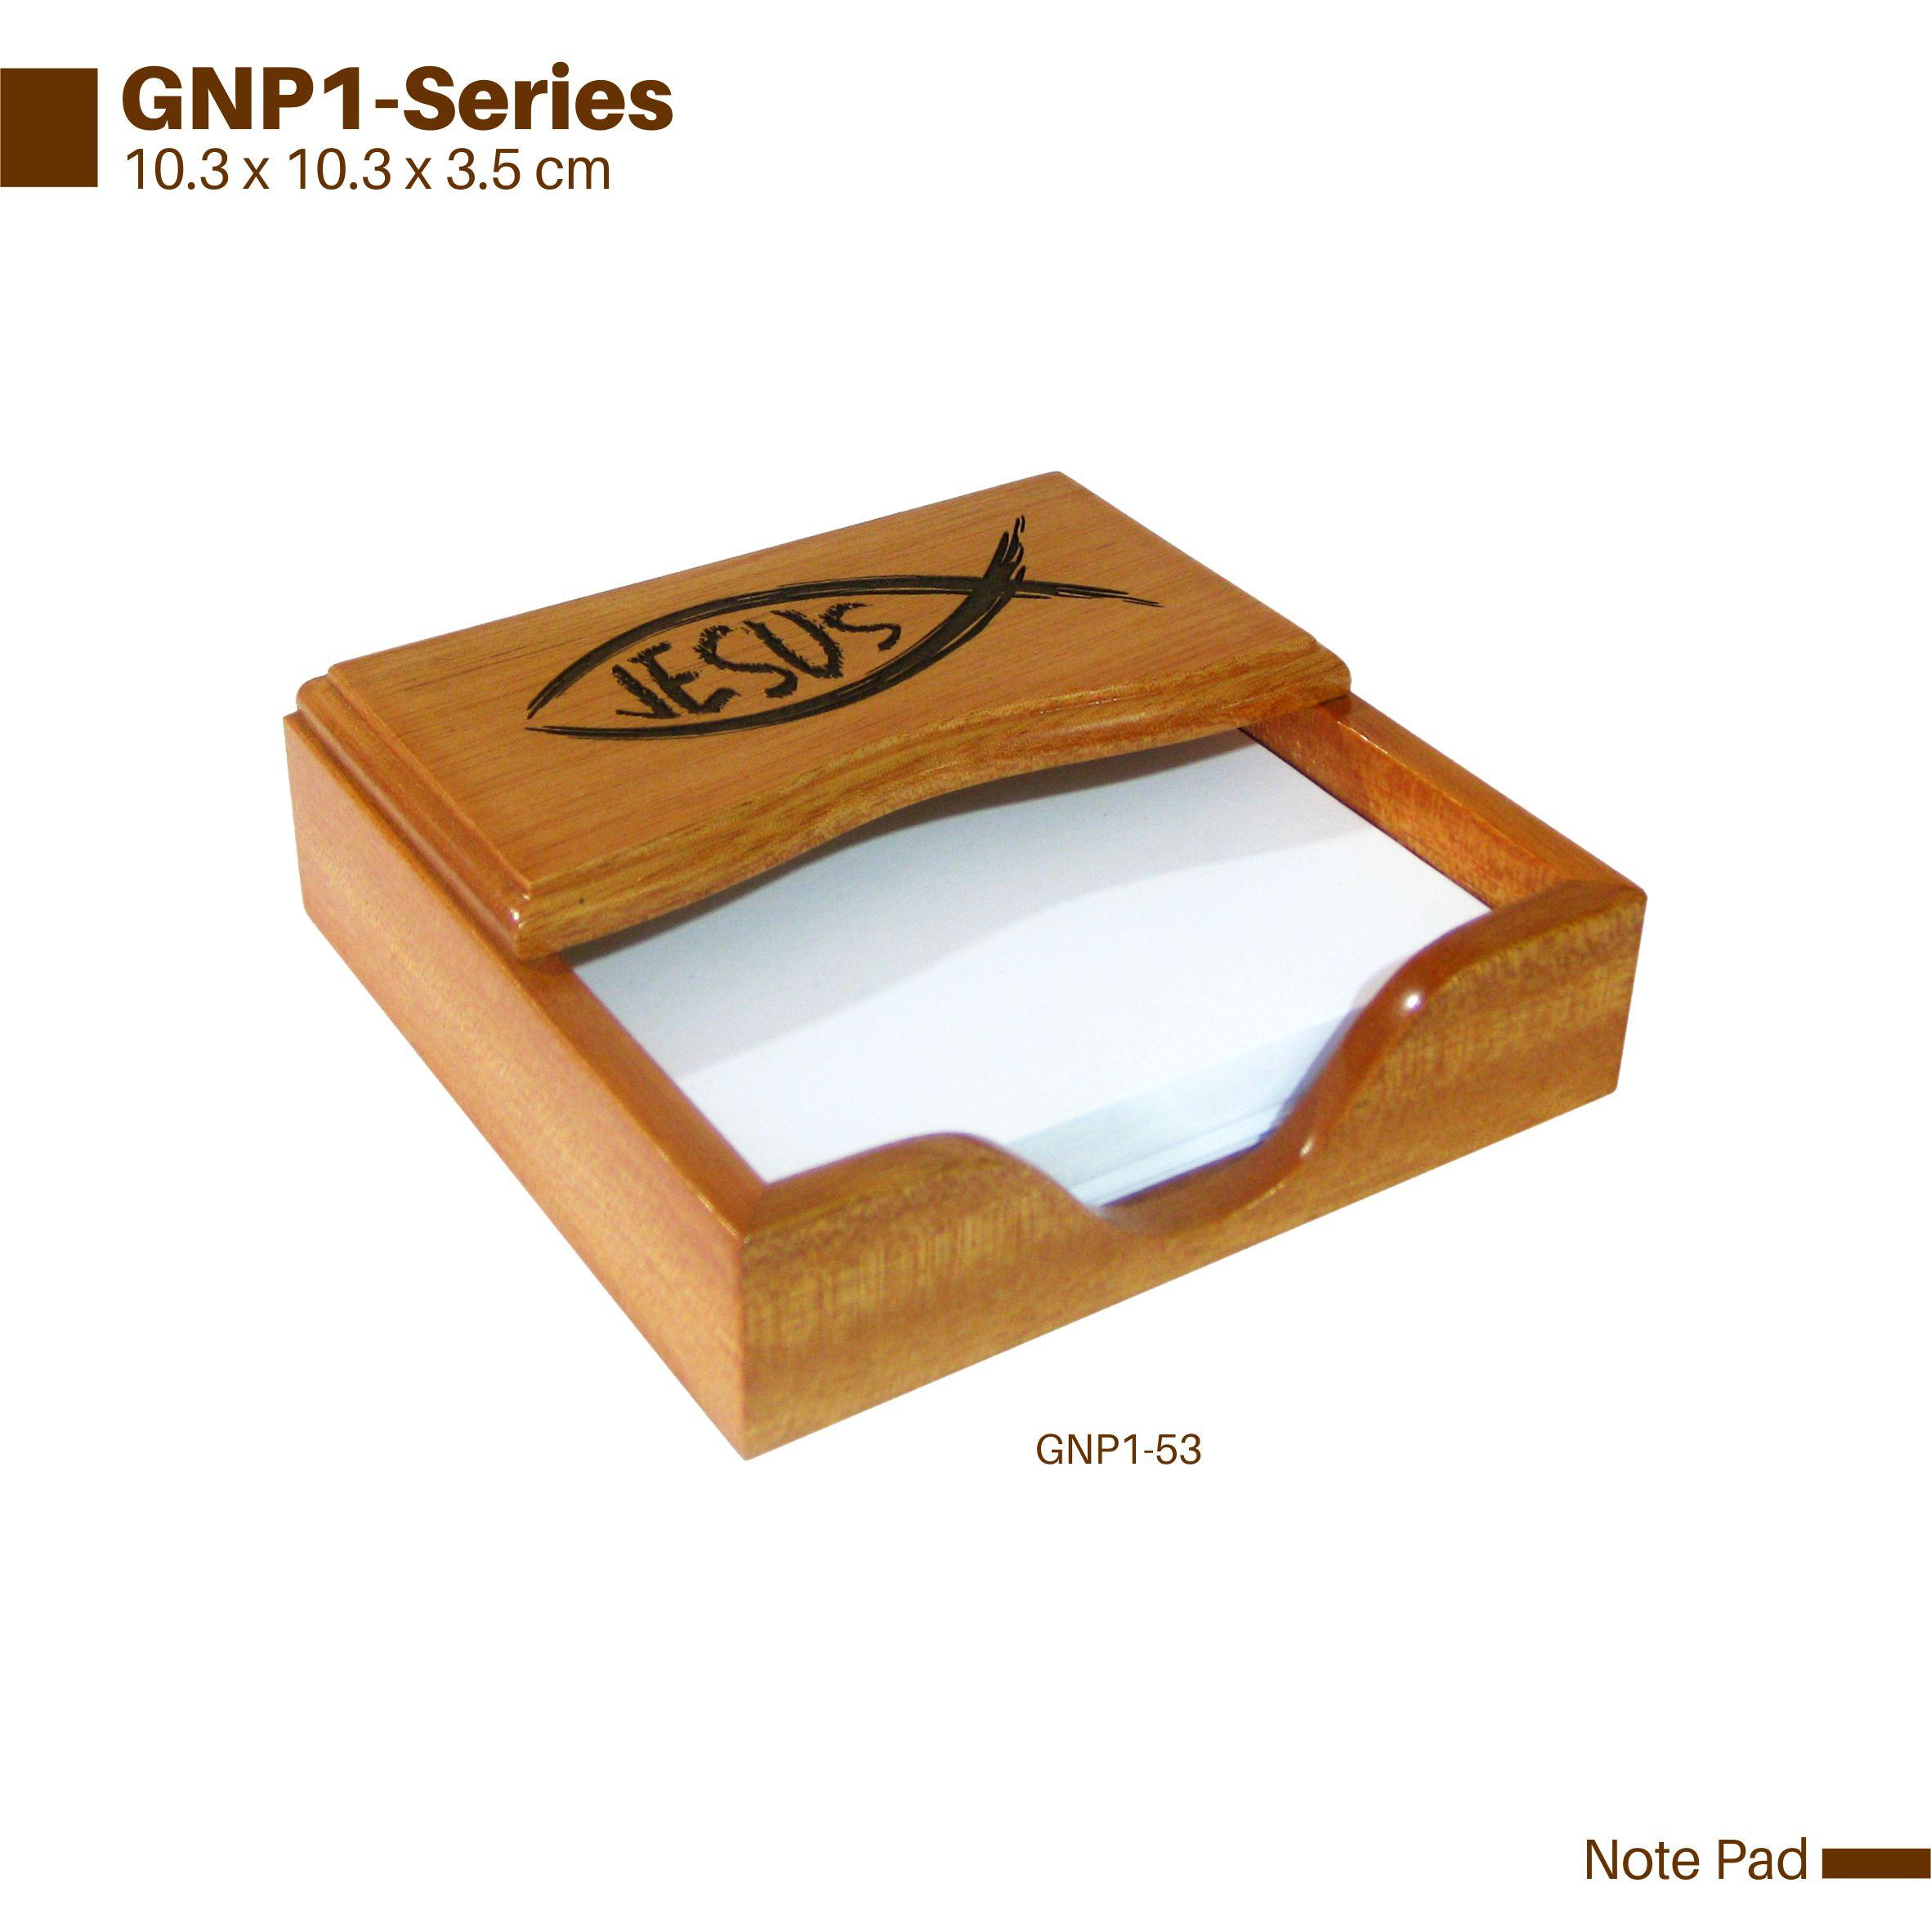 GNP1-Series